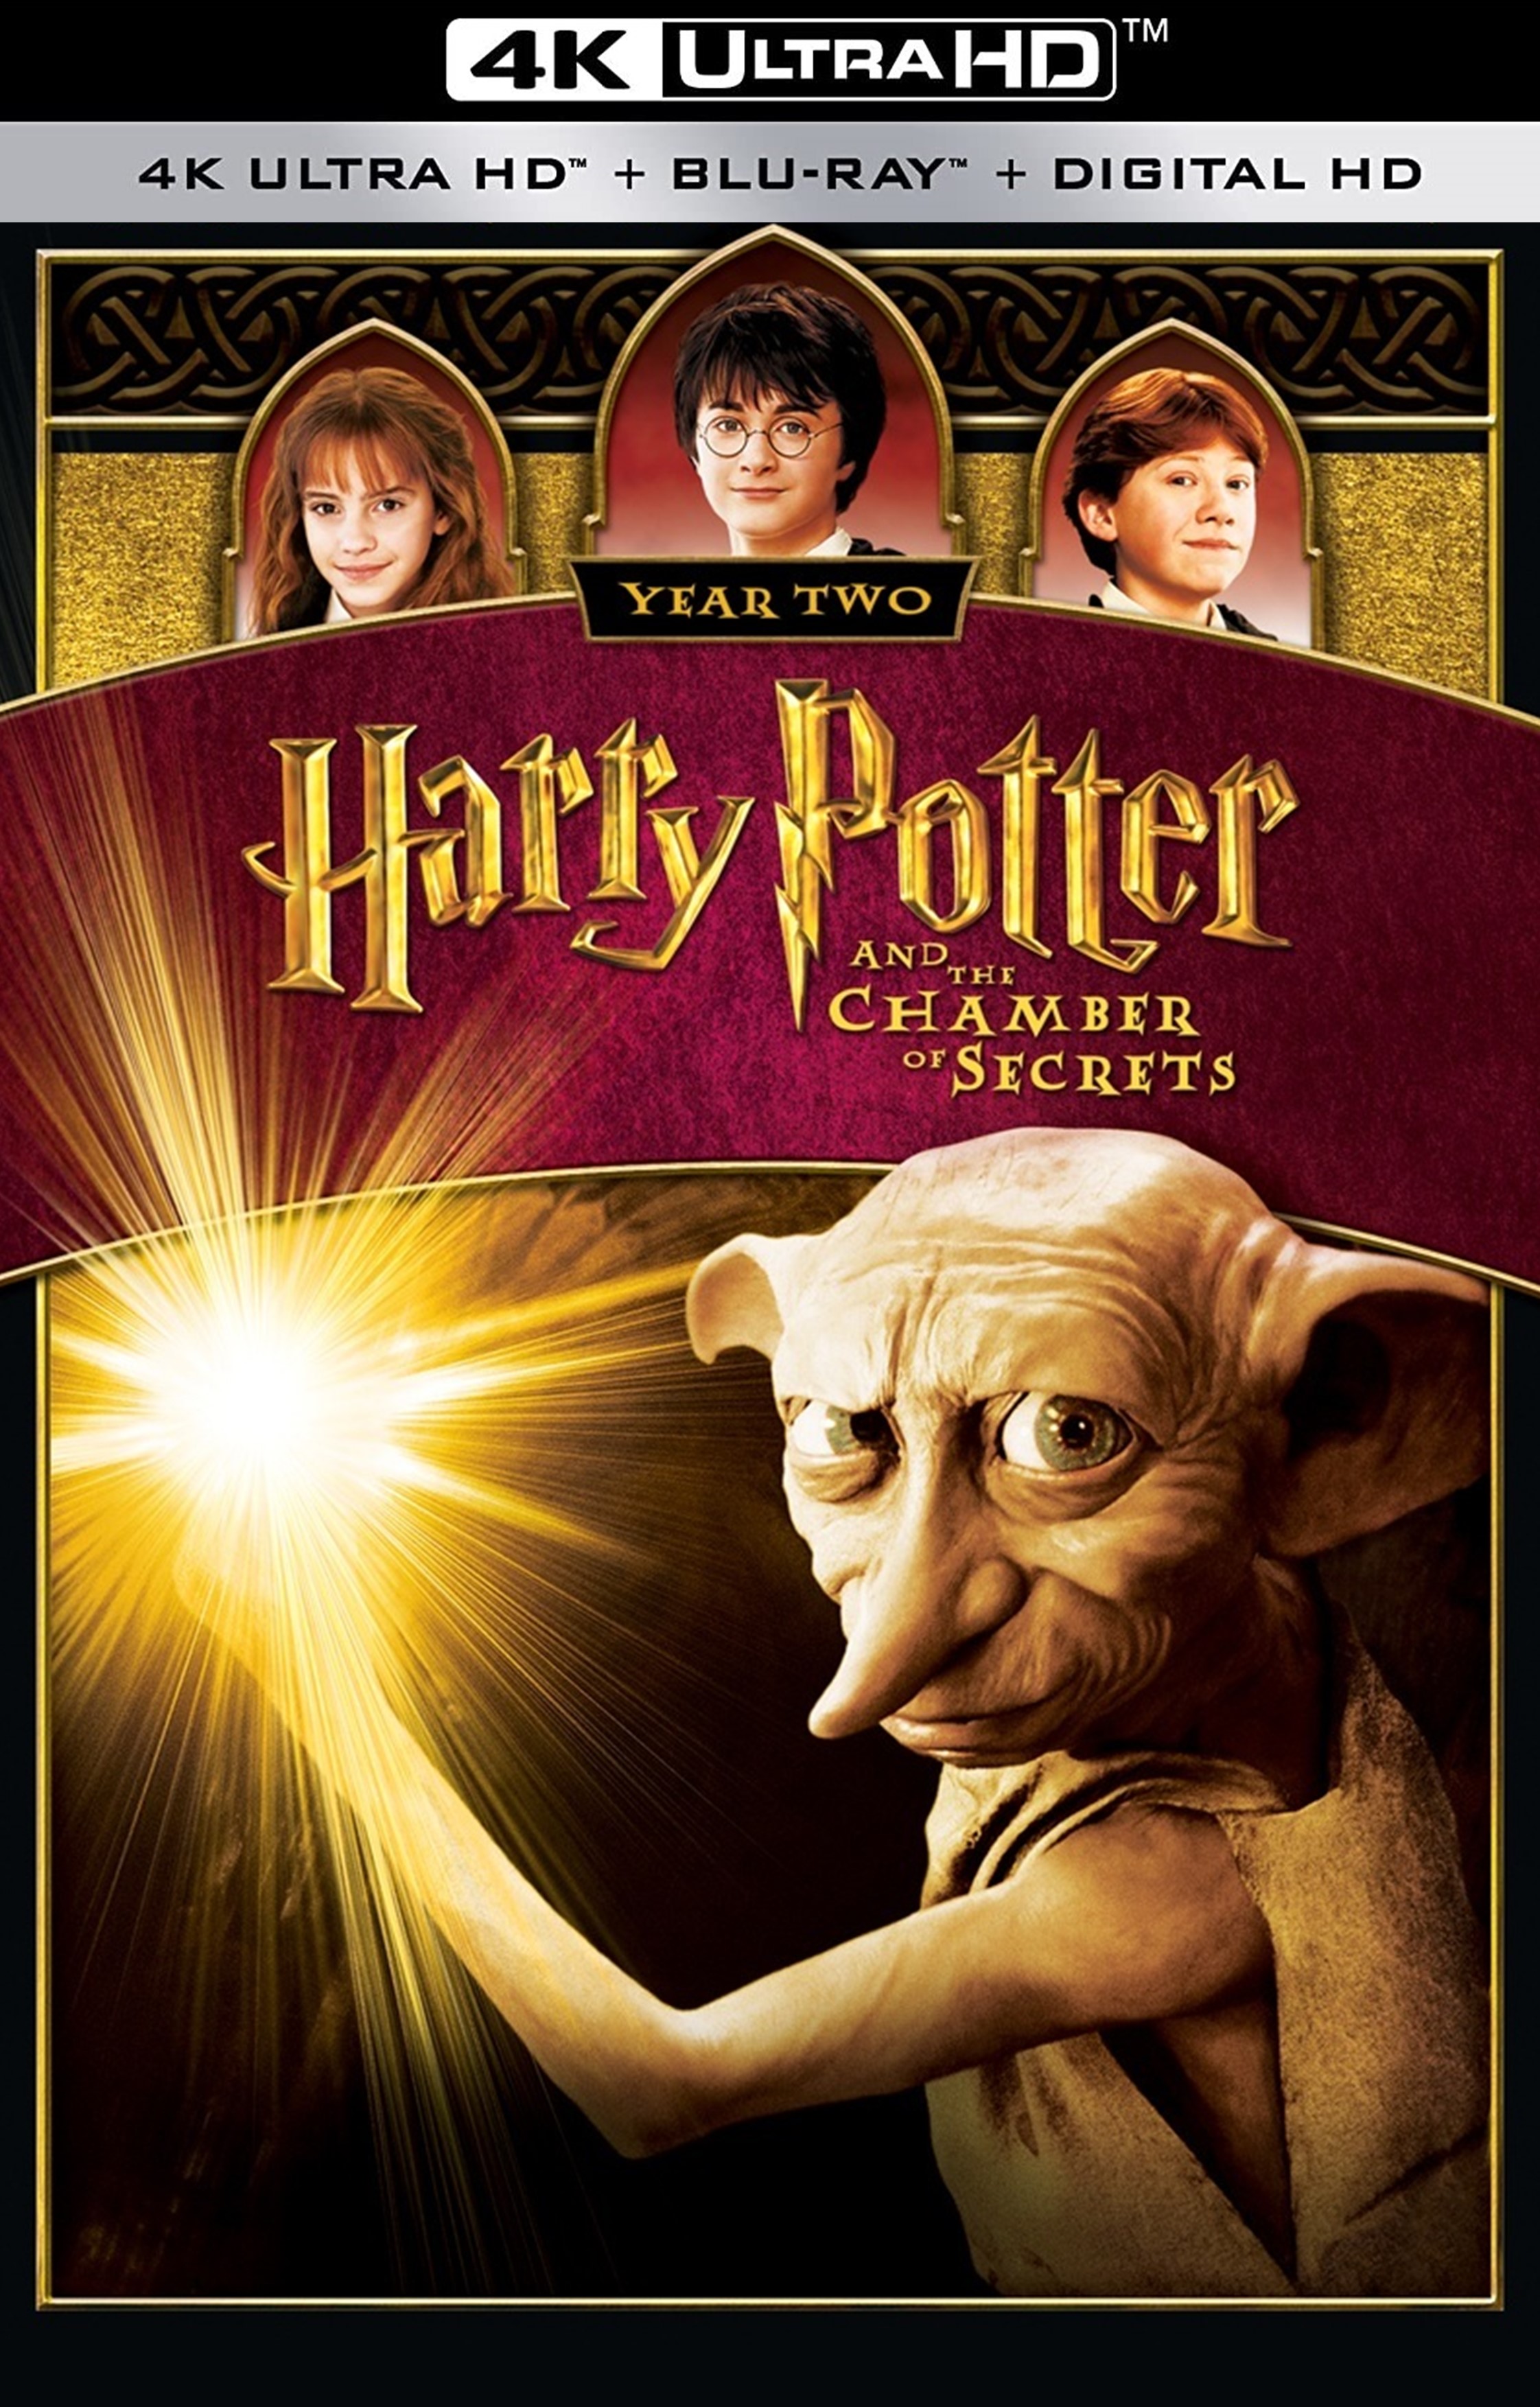 Stiahni si UHD Filmy Harry Potter a Tajemna komnata / Harry Potter and the Chamber of Secrets (2002)(SK/CZ/EN)(2160p 4K BRRip) = CSFD 78%